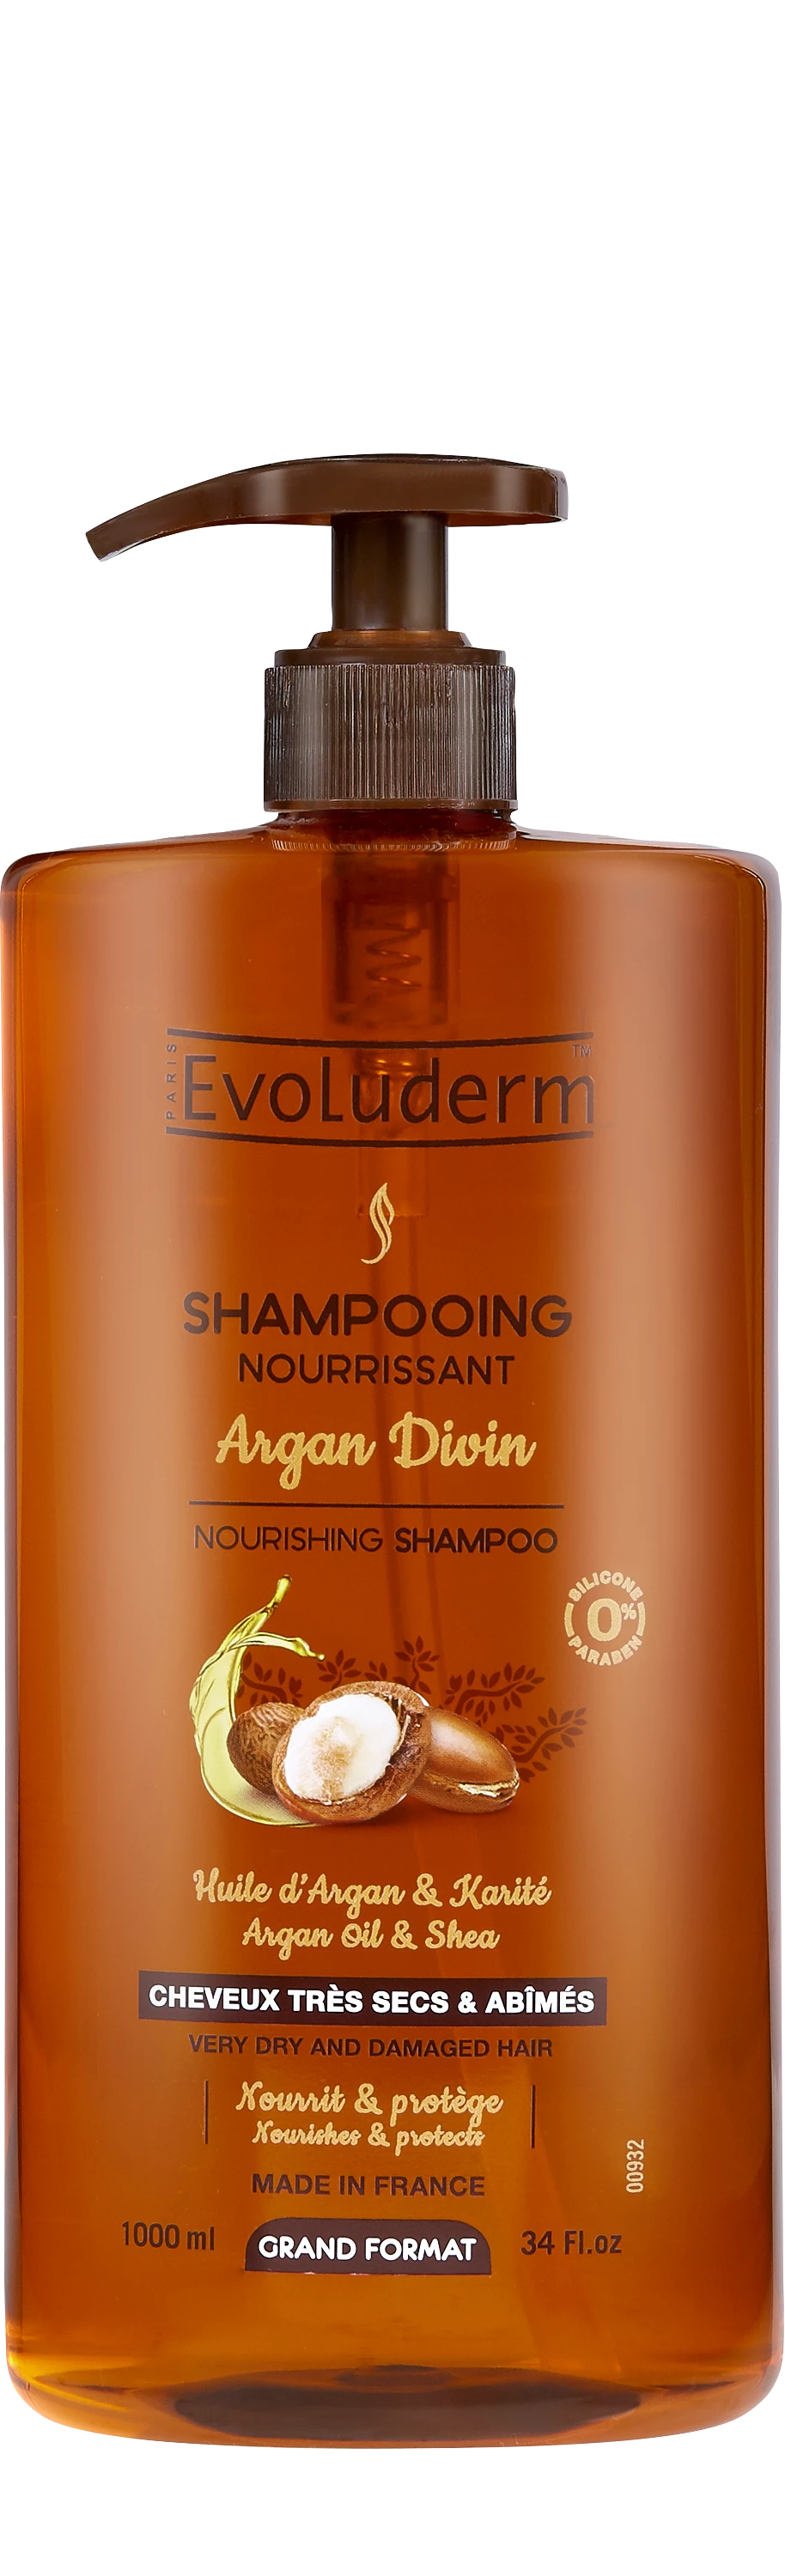 Divine Argan Nourishing Shampoo, 1L - EVOLUDERM